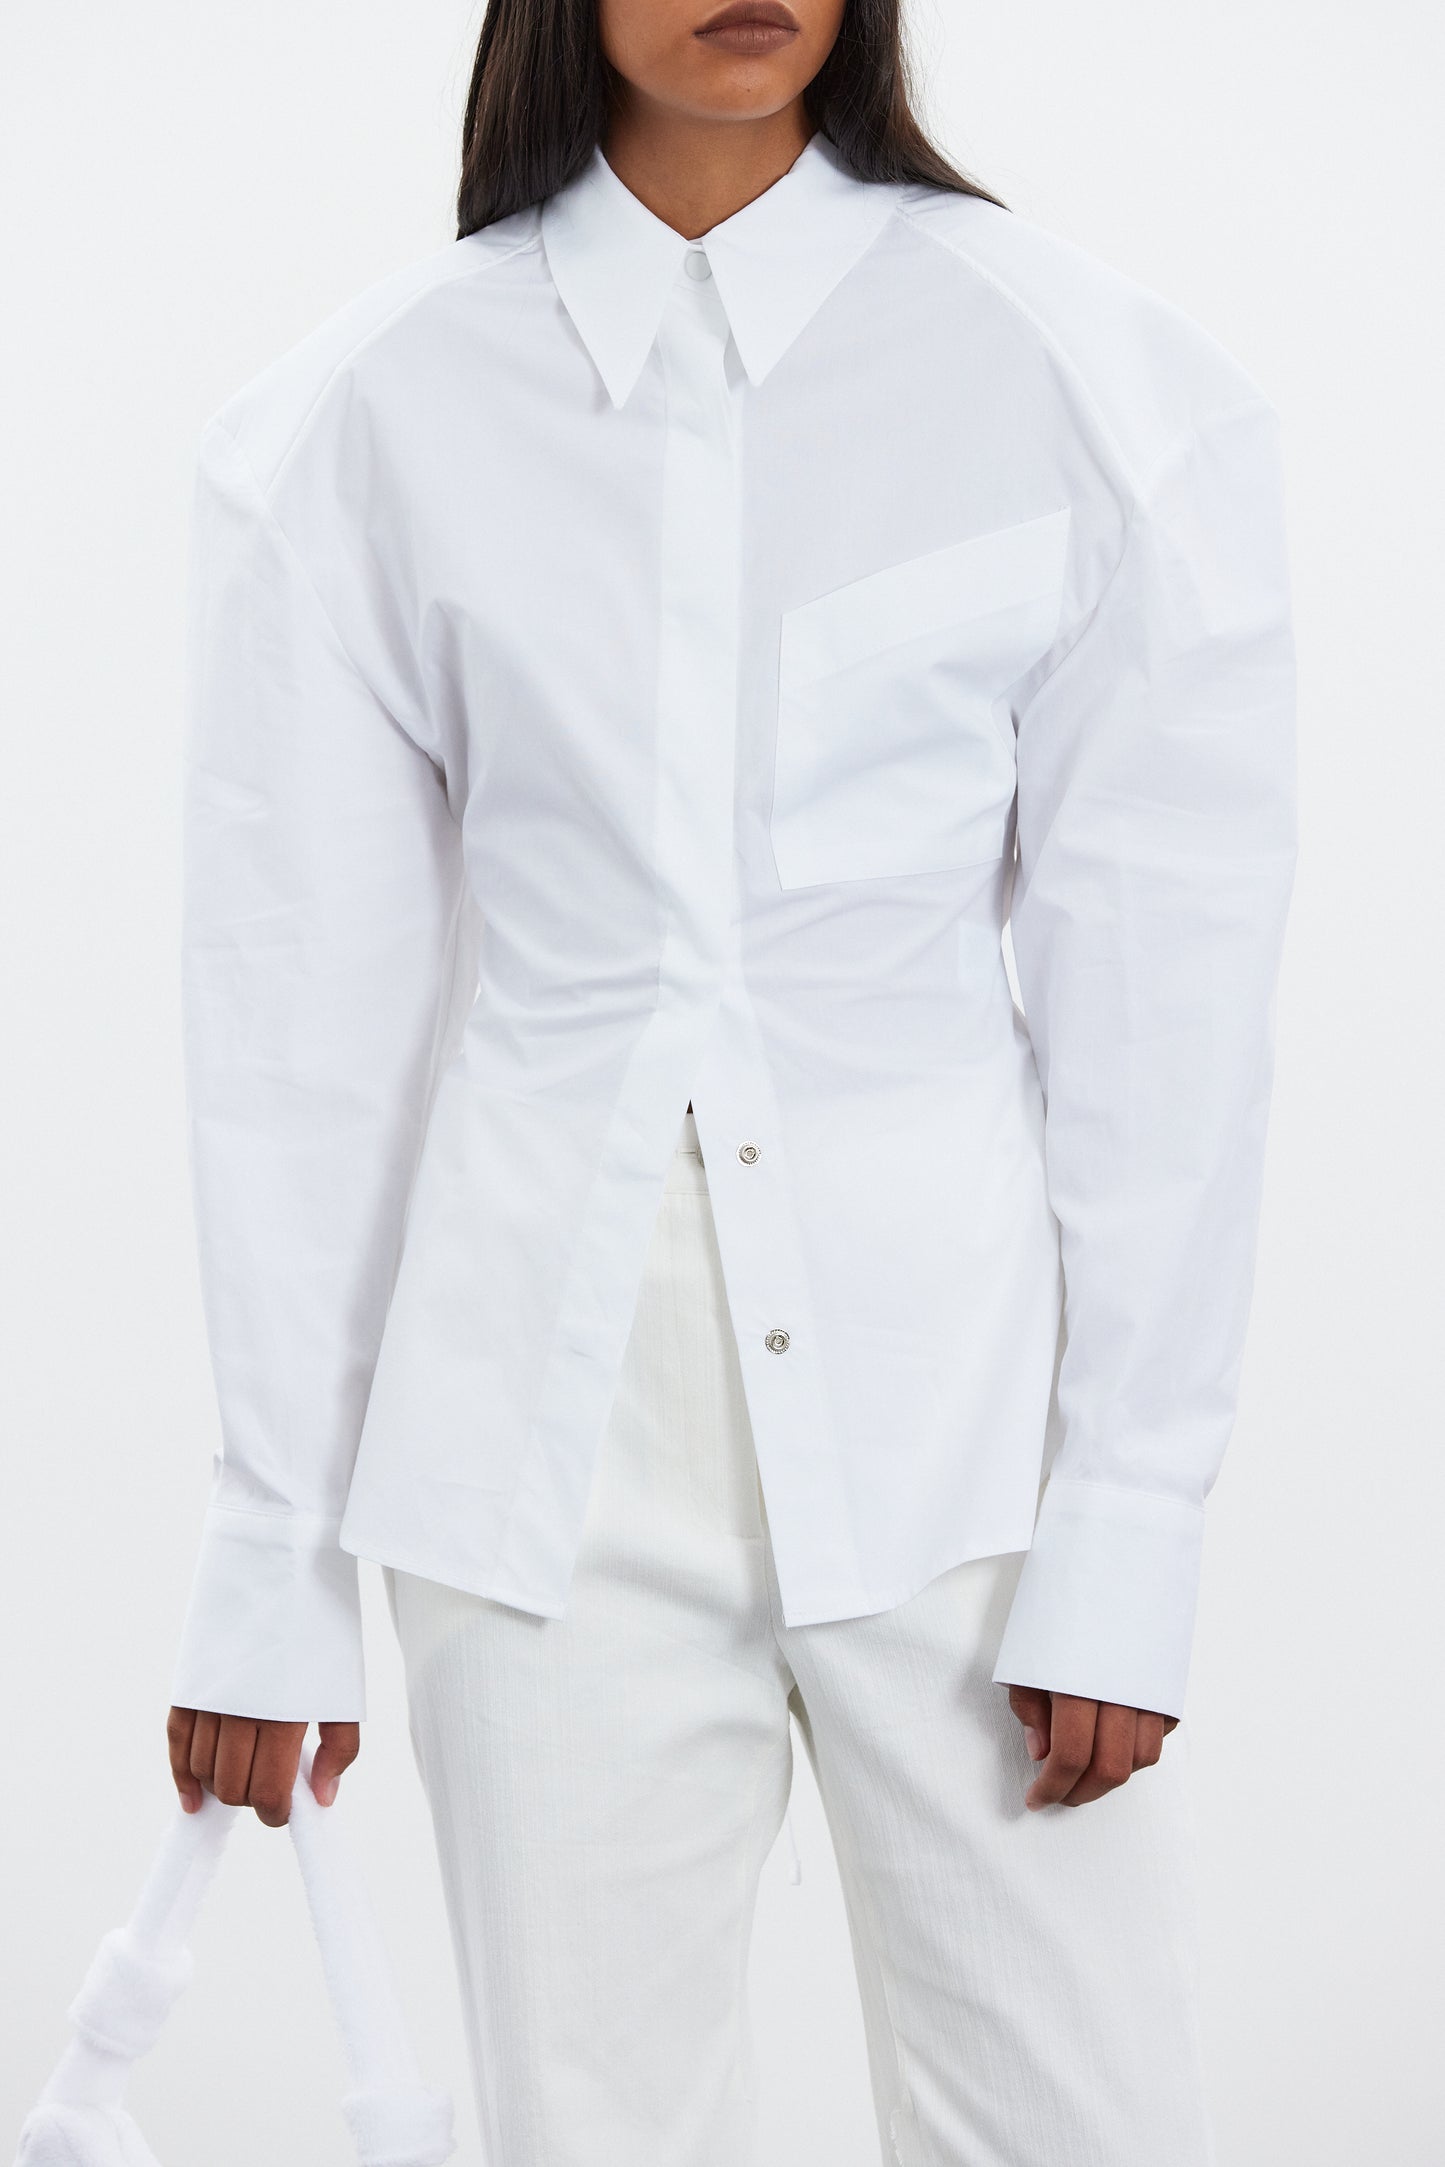 Backless Shirt White Poplin  Backless shirt, Backless, Shirts white